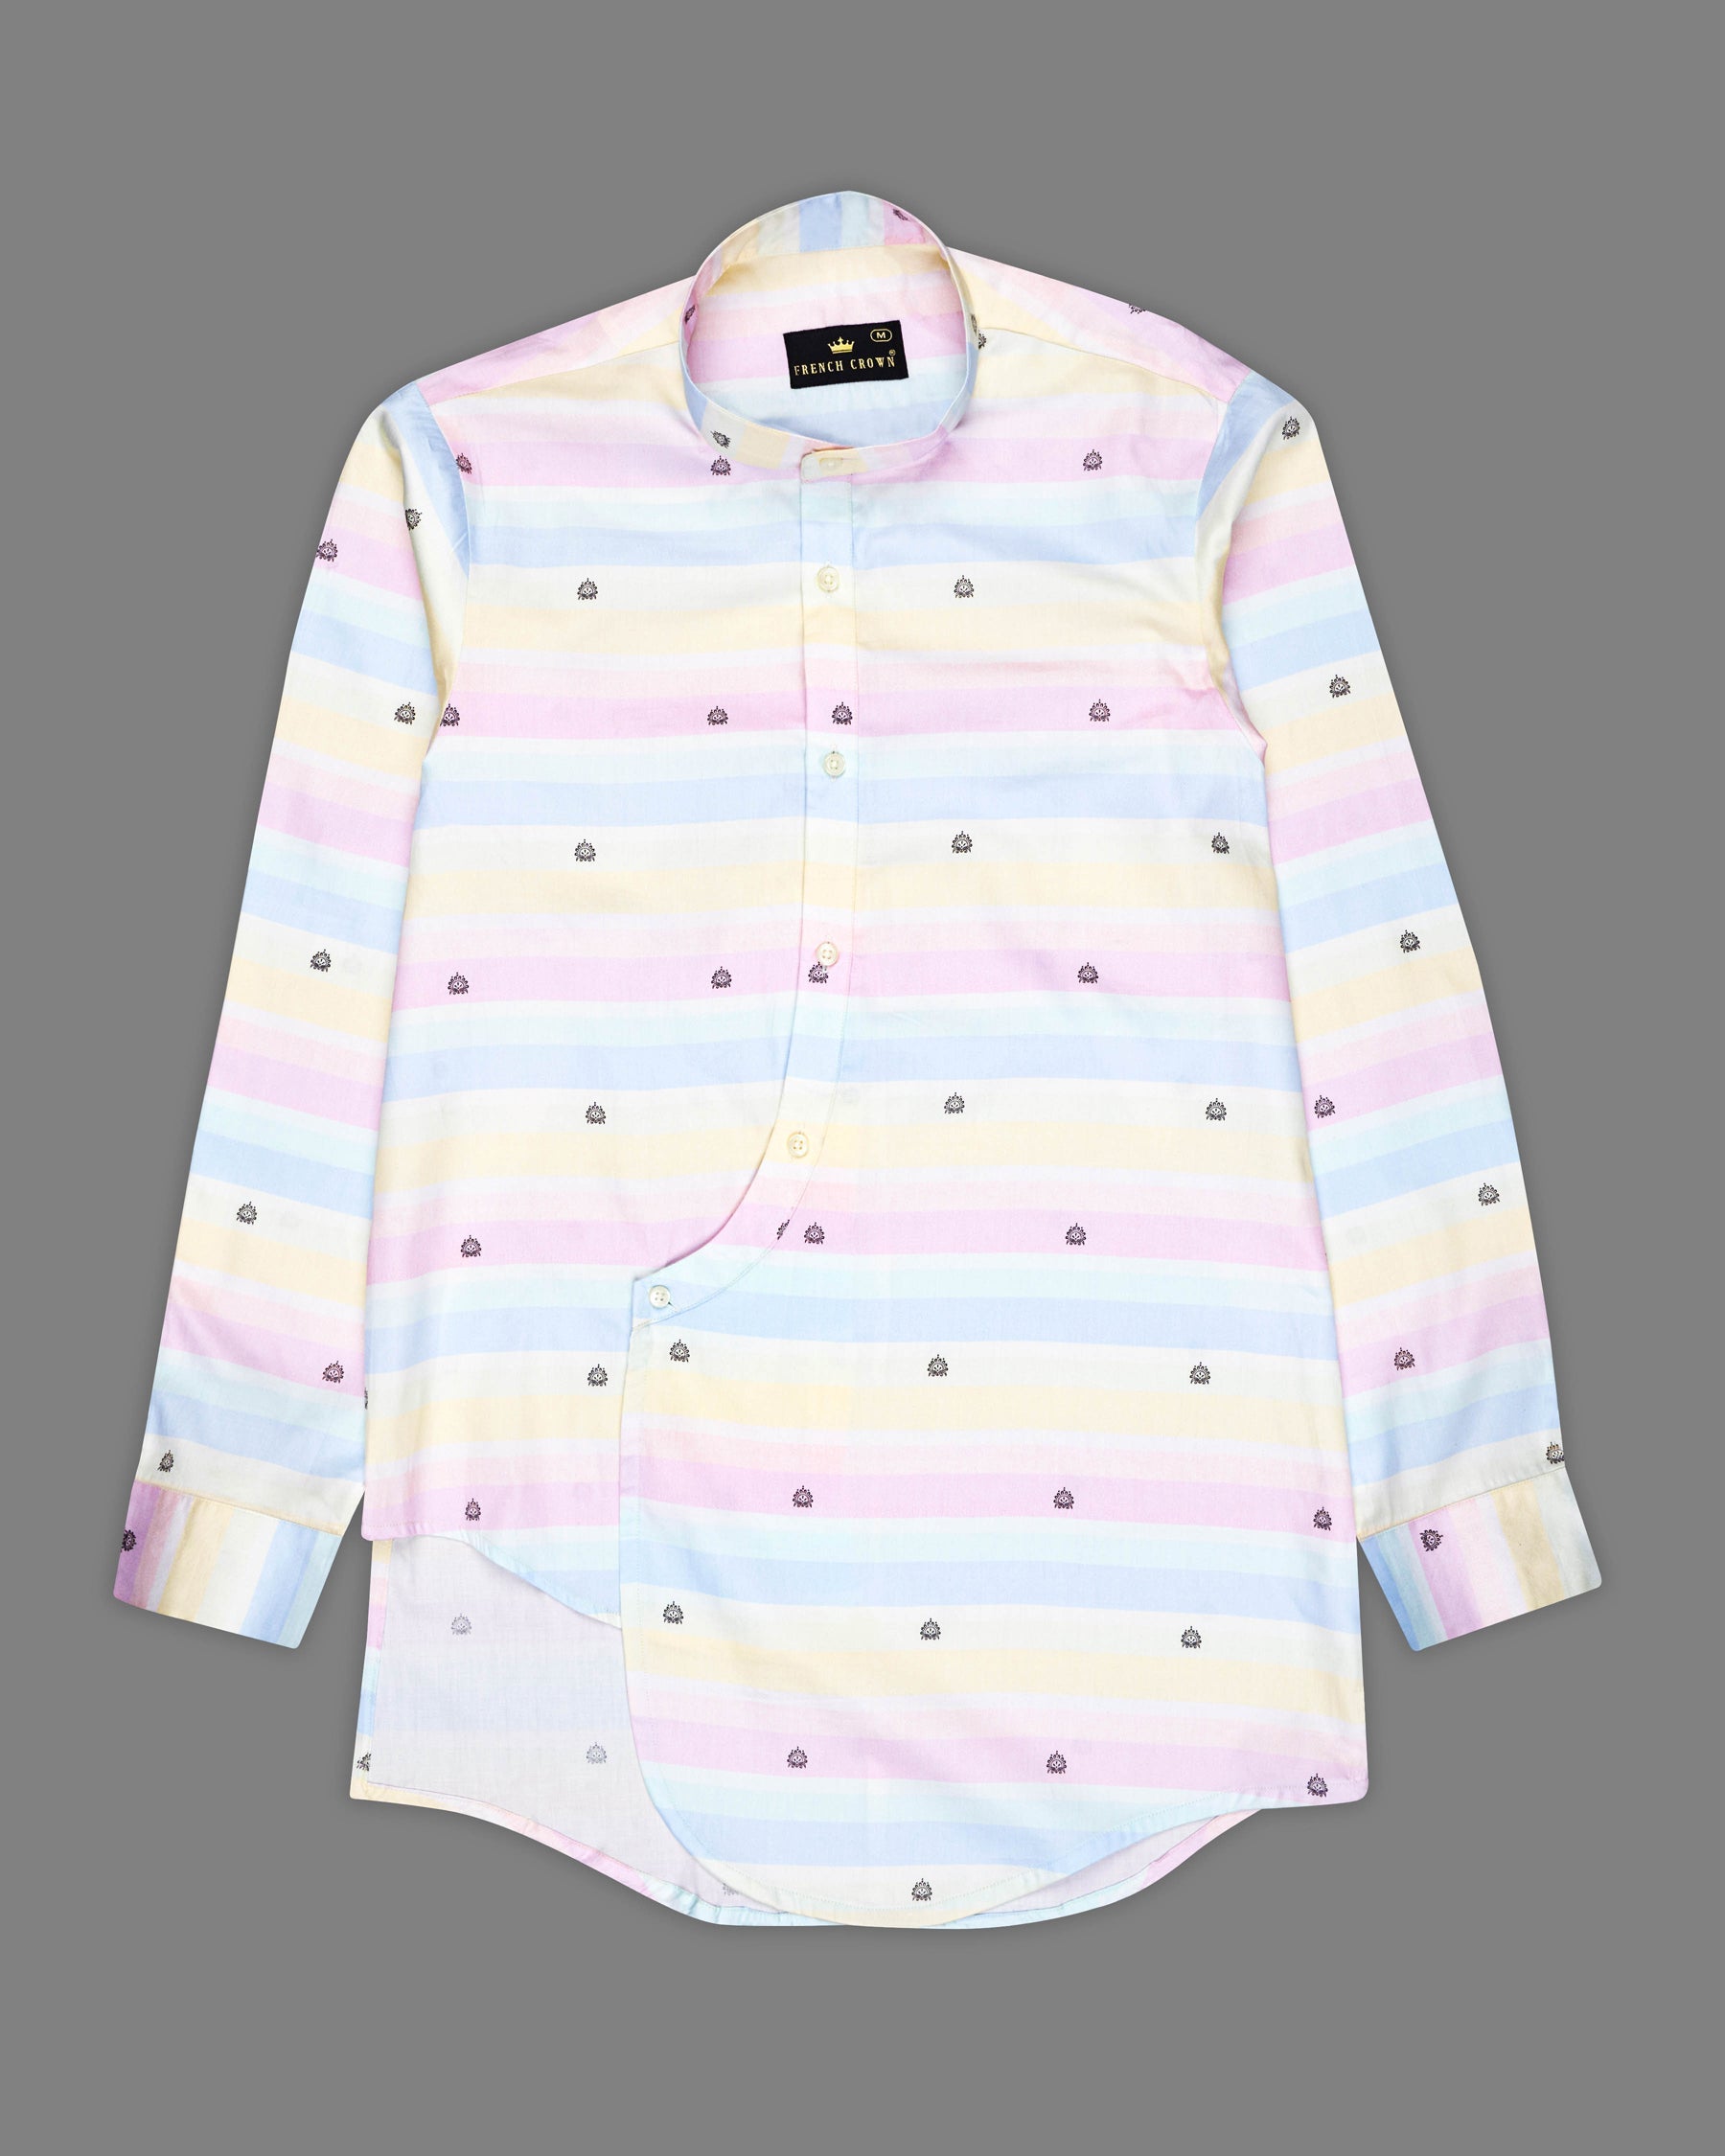 Cherub Pink and Multicolour Printed Super Soft Premium Cotton Women’s Shirt WS059-M-32, WS059-M-34, WS059-M-36, WS059-M-38, WS059-M-40, WS059-M-42